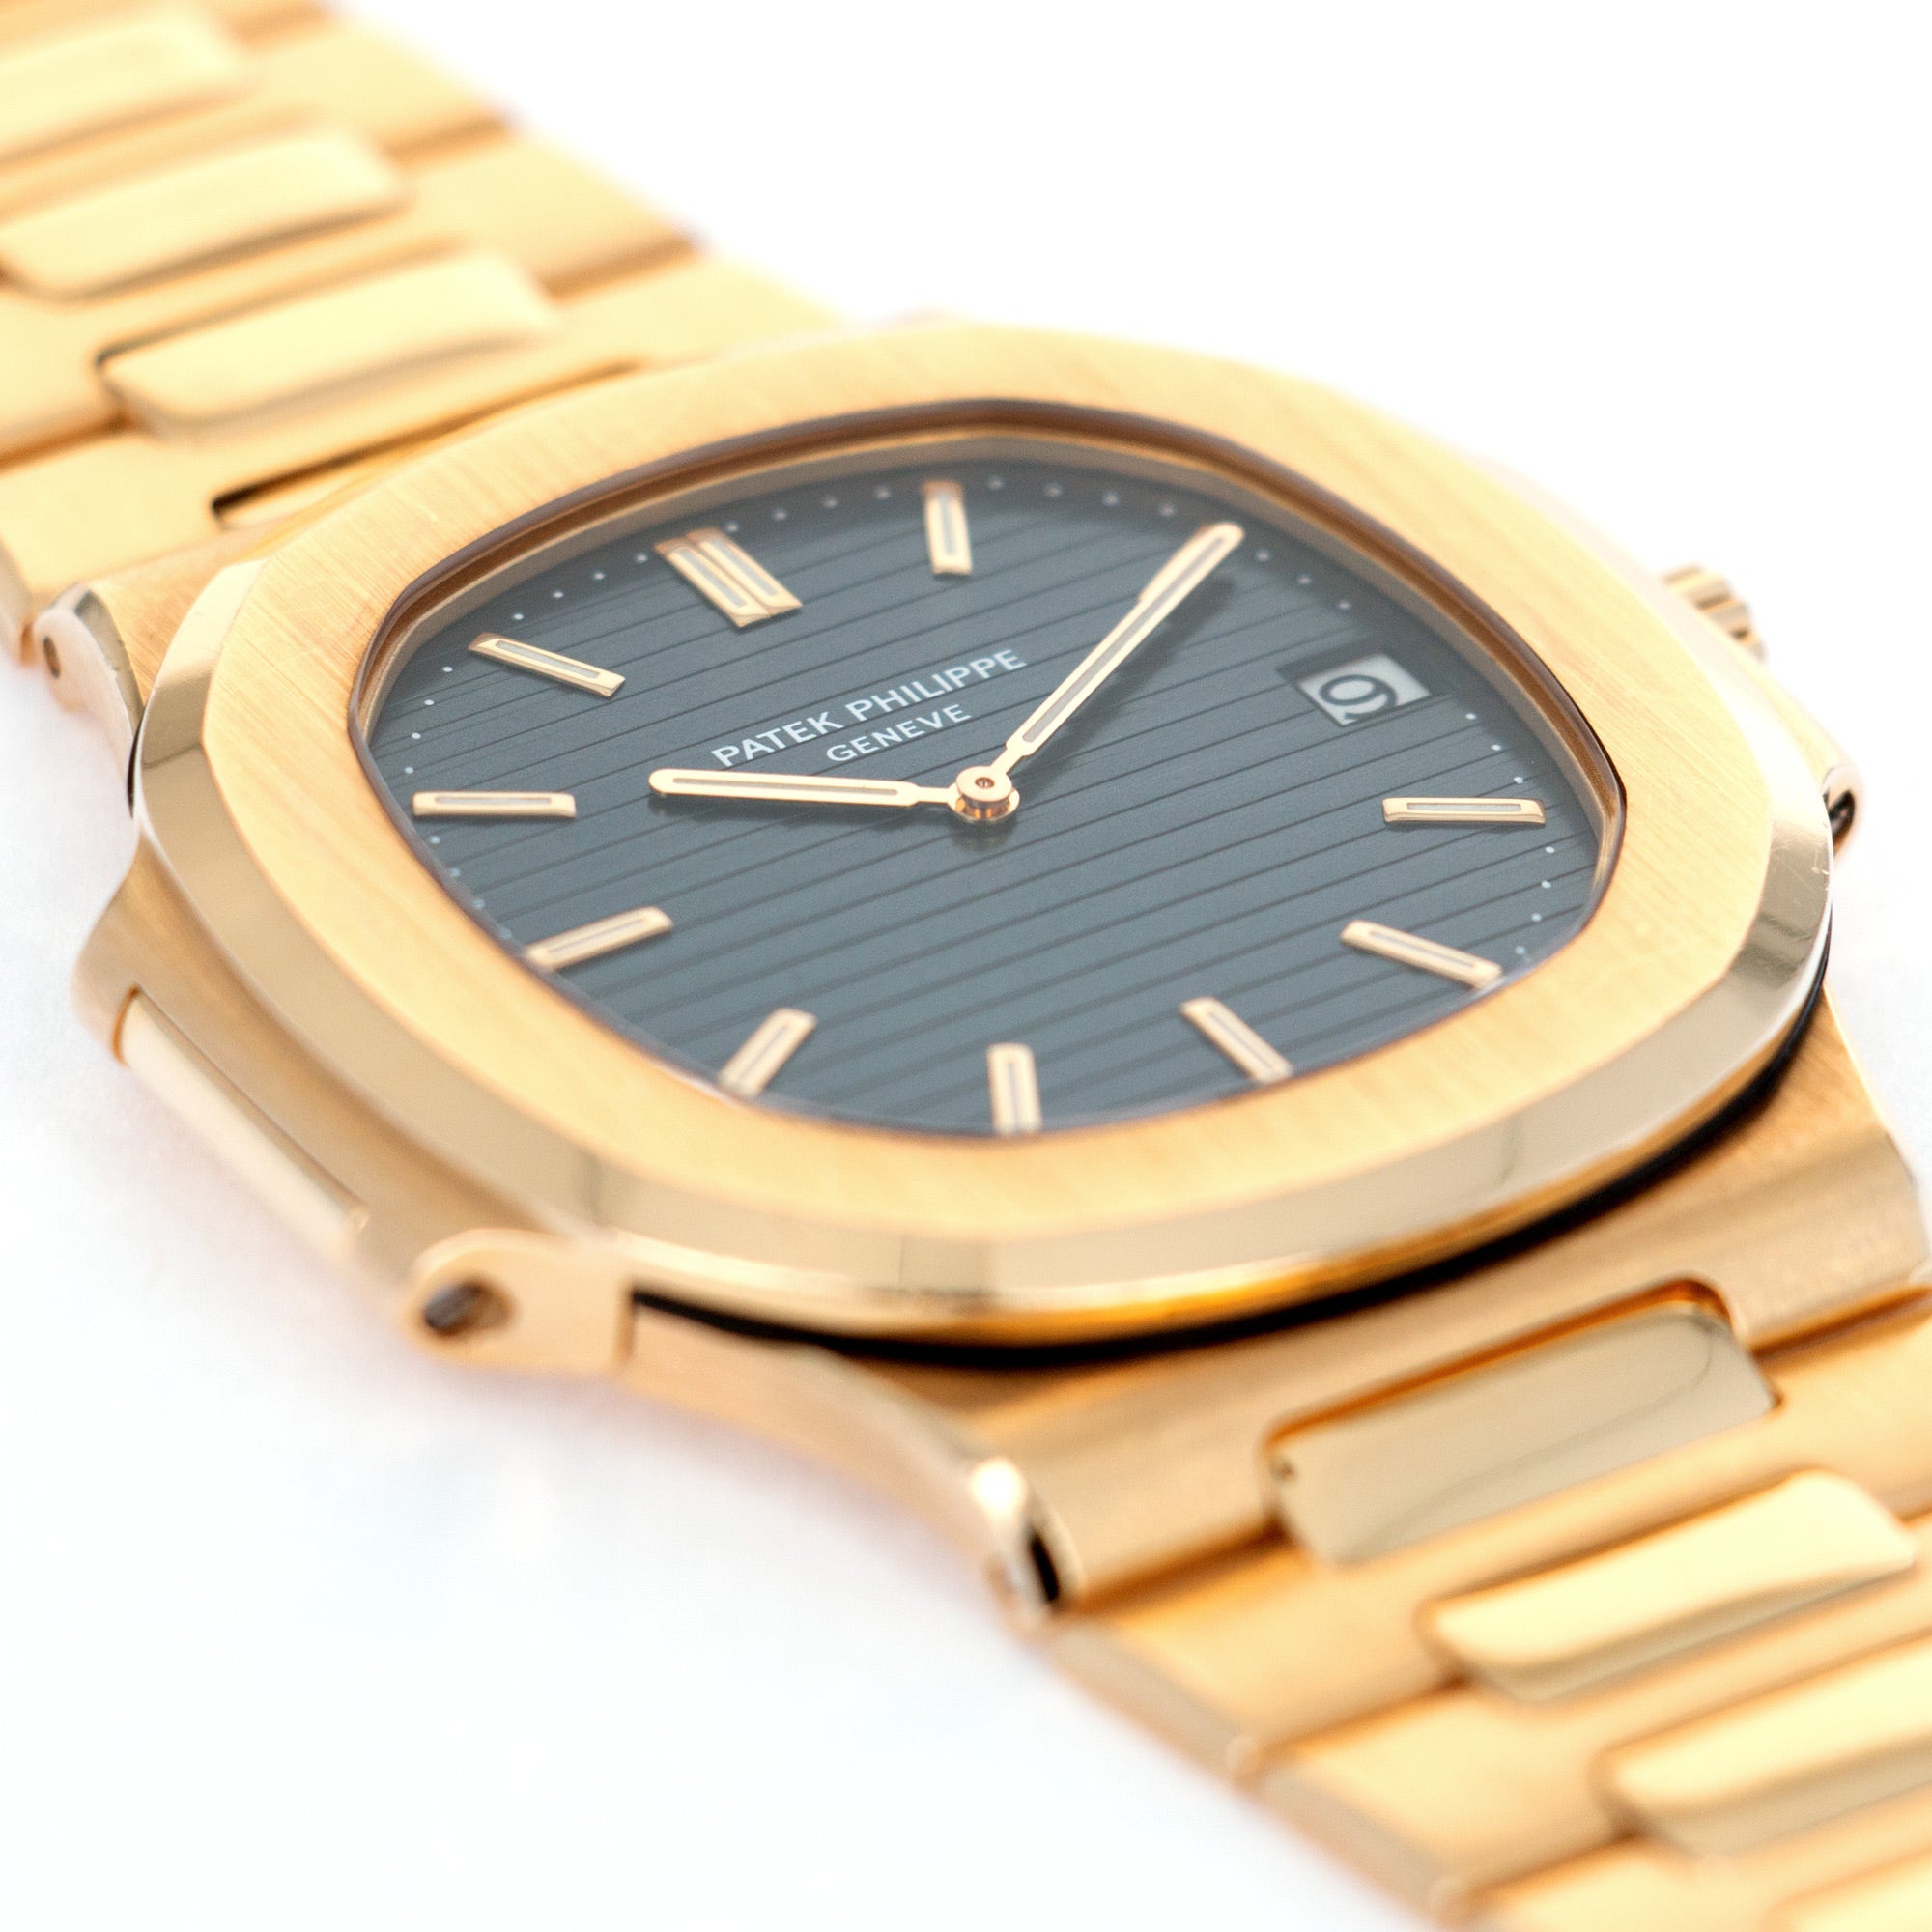 Patek Philippe - Patek Philippe Yellow Gold Jumbo Nautilus Watch Ref. 3700 with Archive Paper - The Keystone Watches